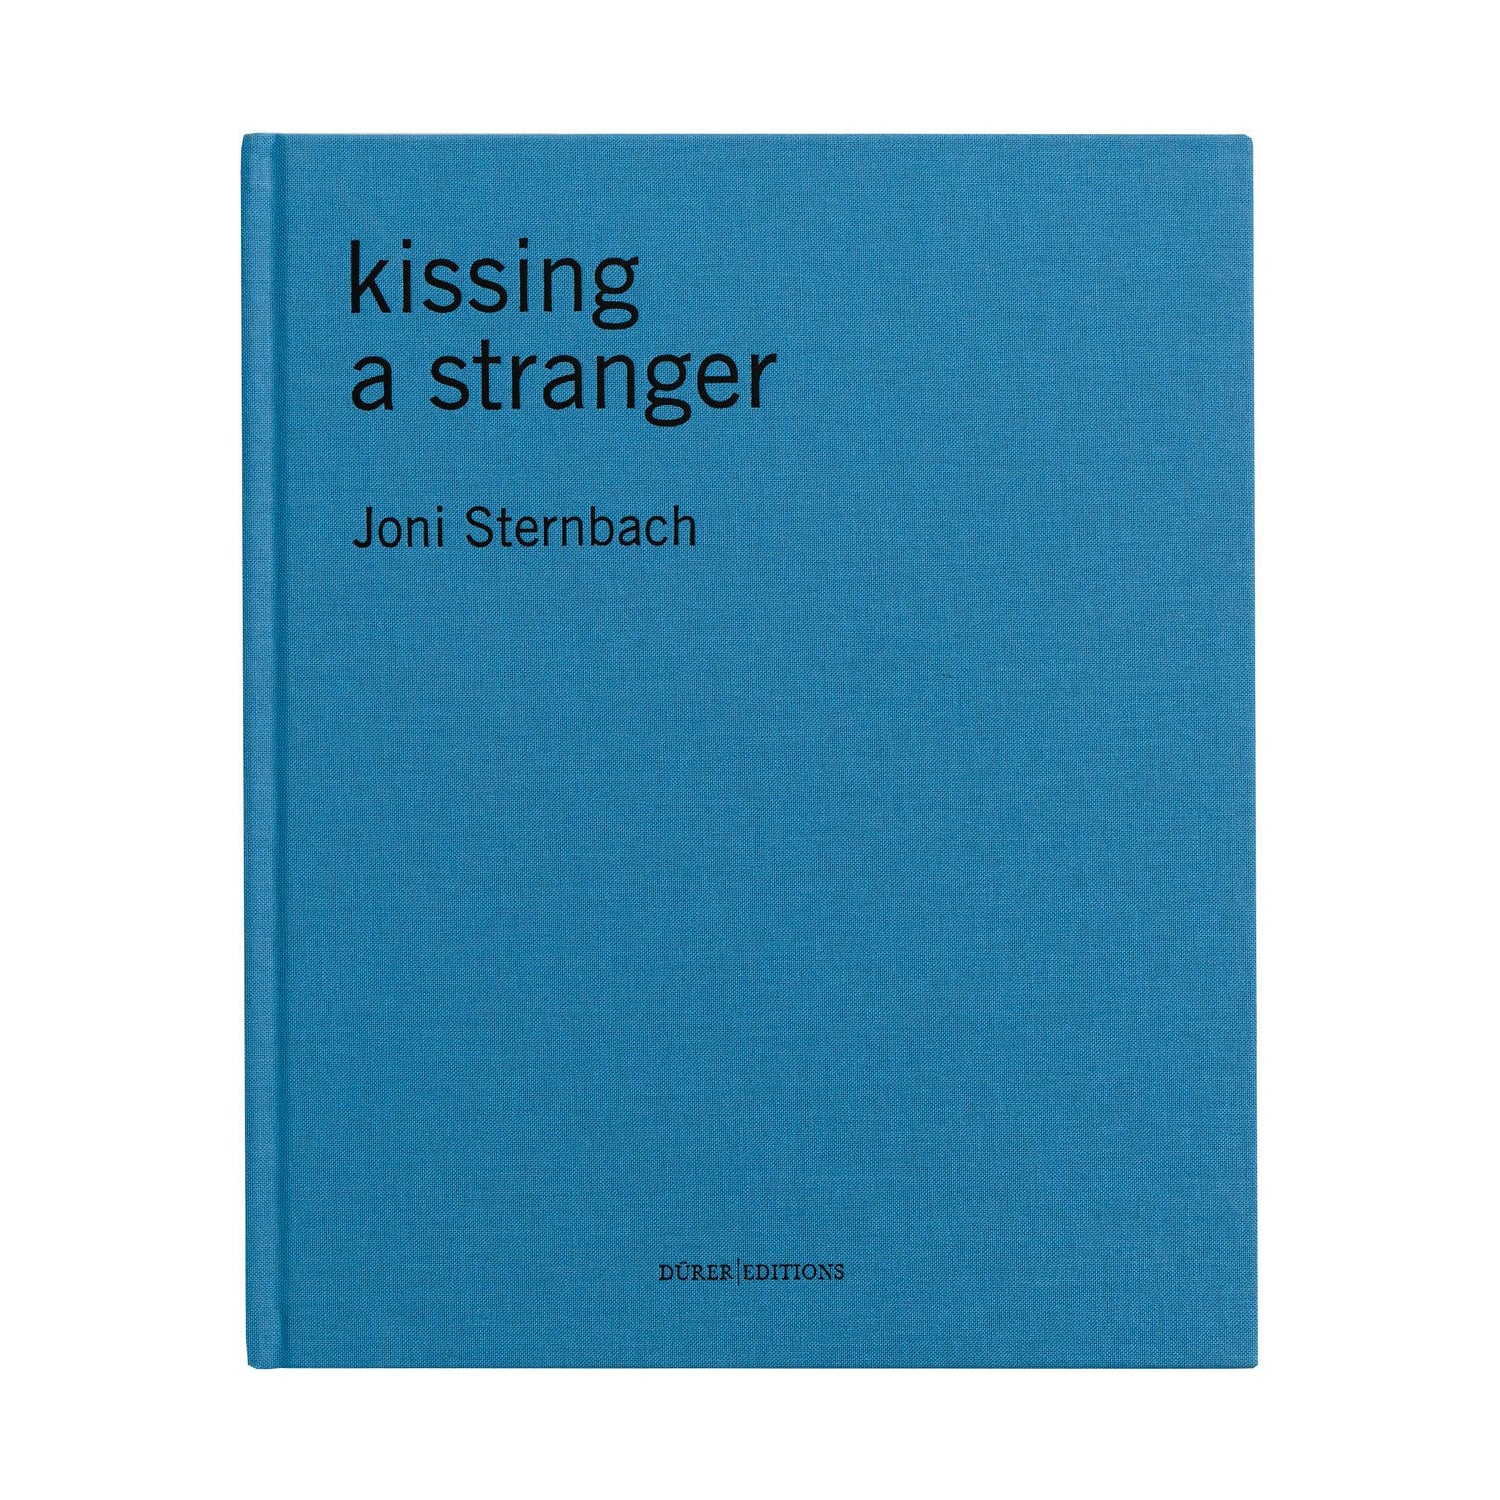 Joni Sternbach - kissing a stranger. Photo Museum Ireland.